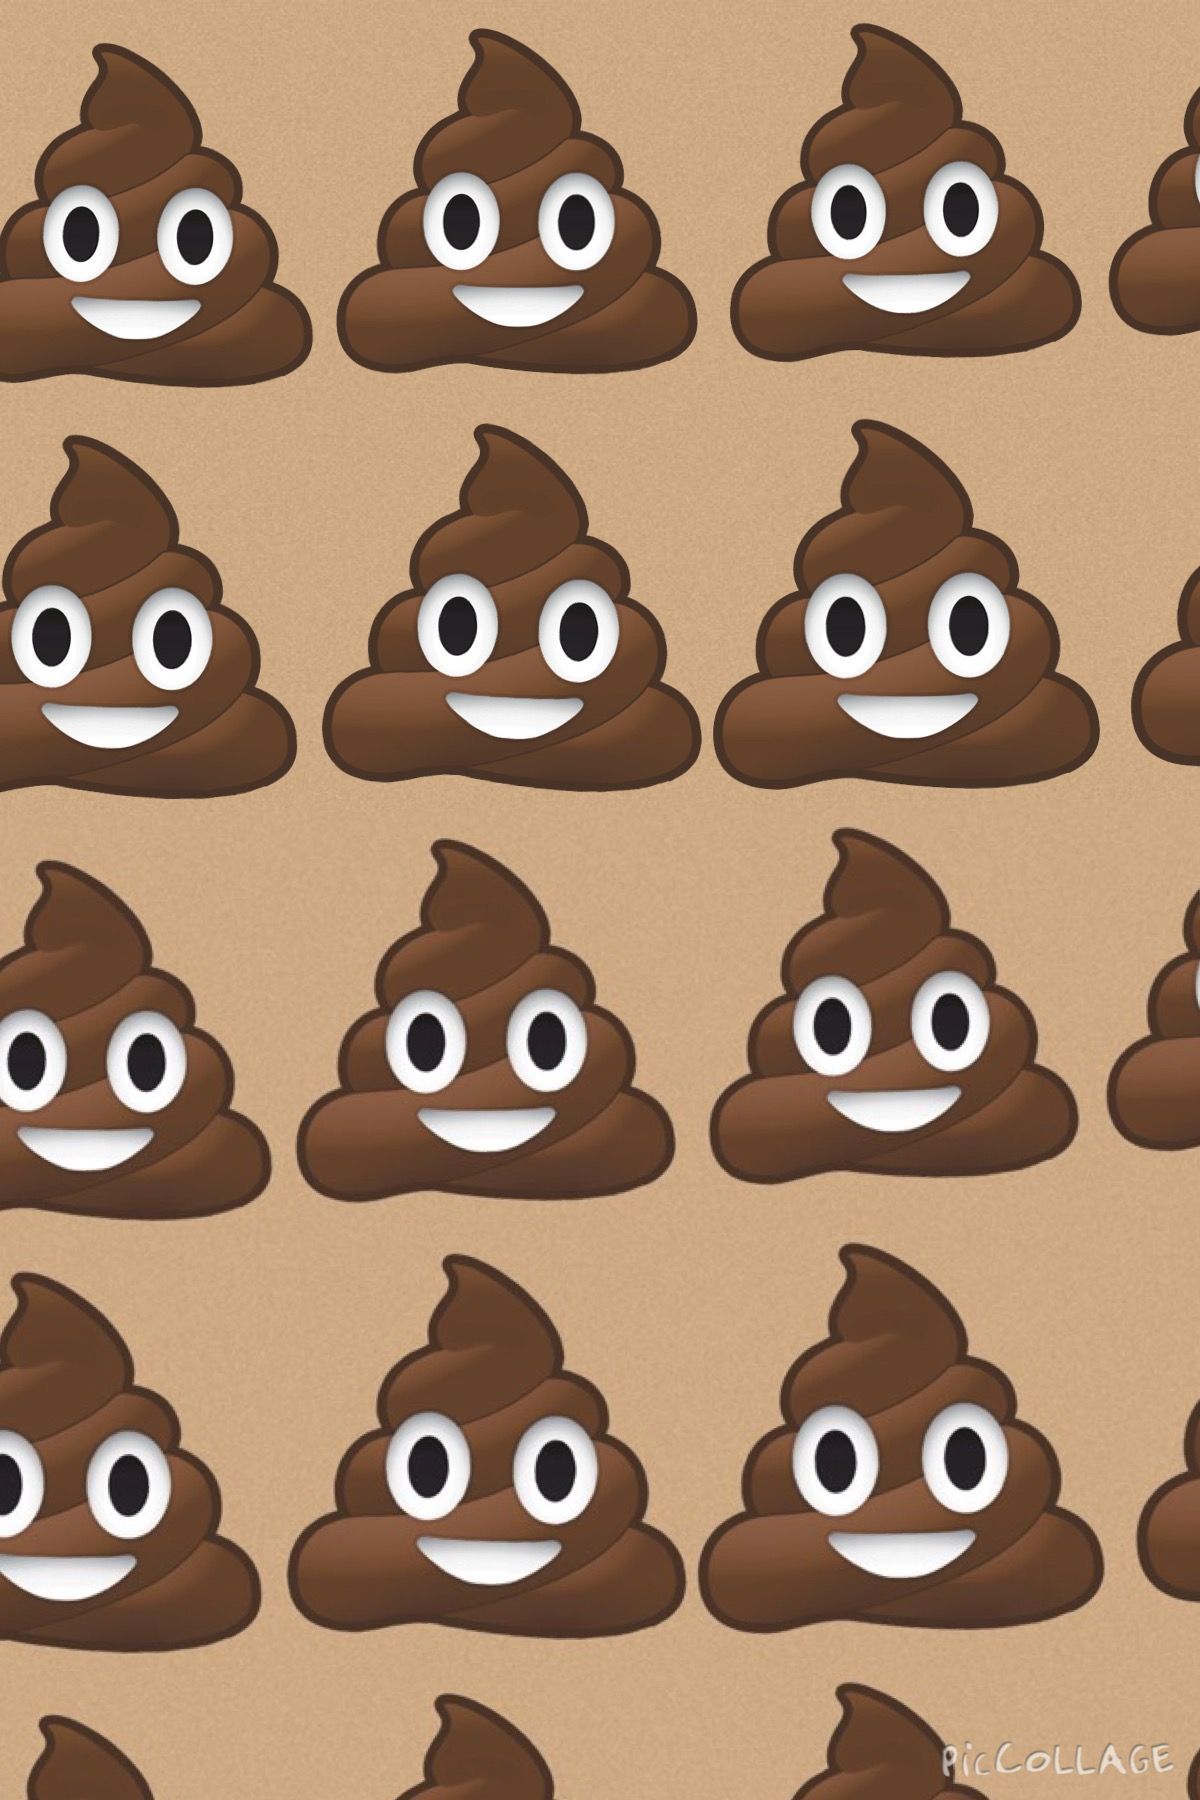 Poop Emoji Wallpaper Top Background